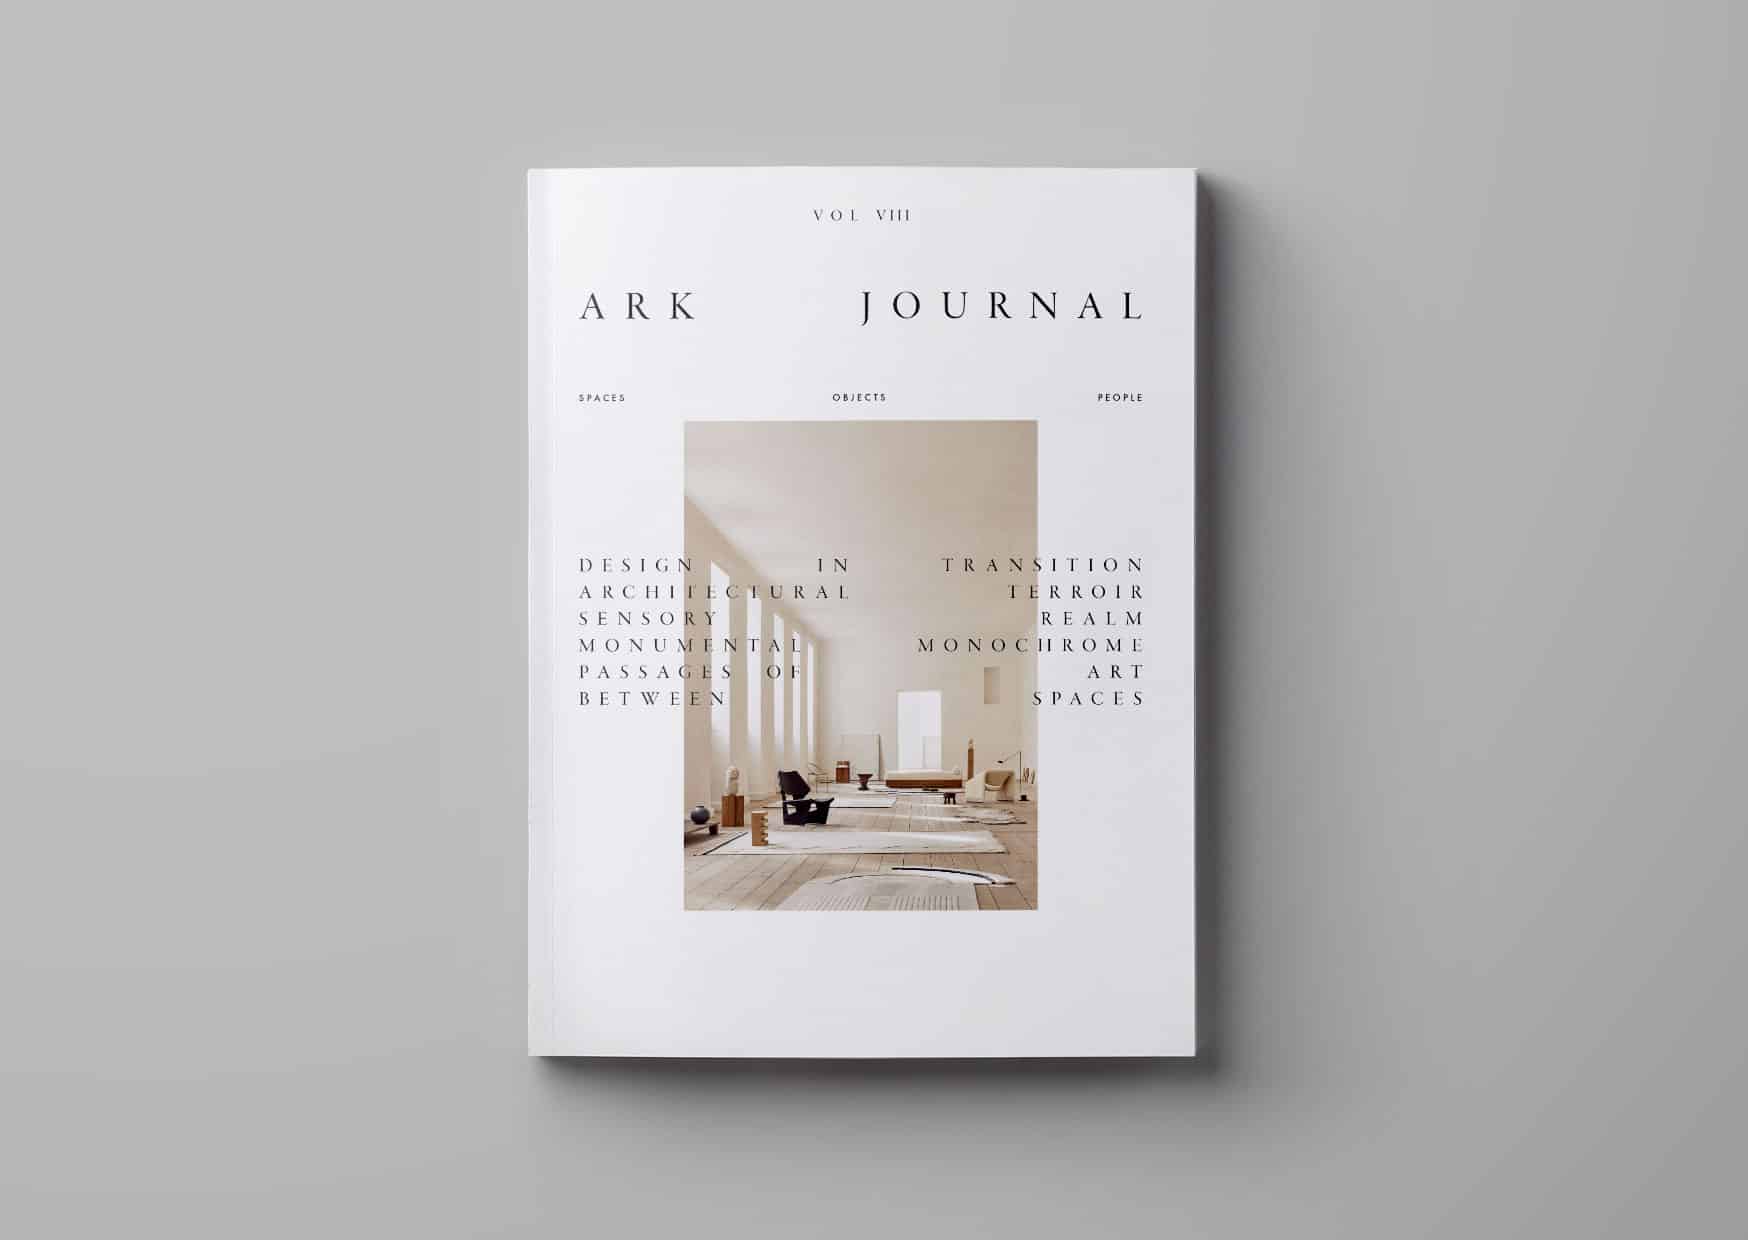 Ark Journal・Volume VIII